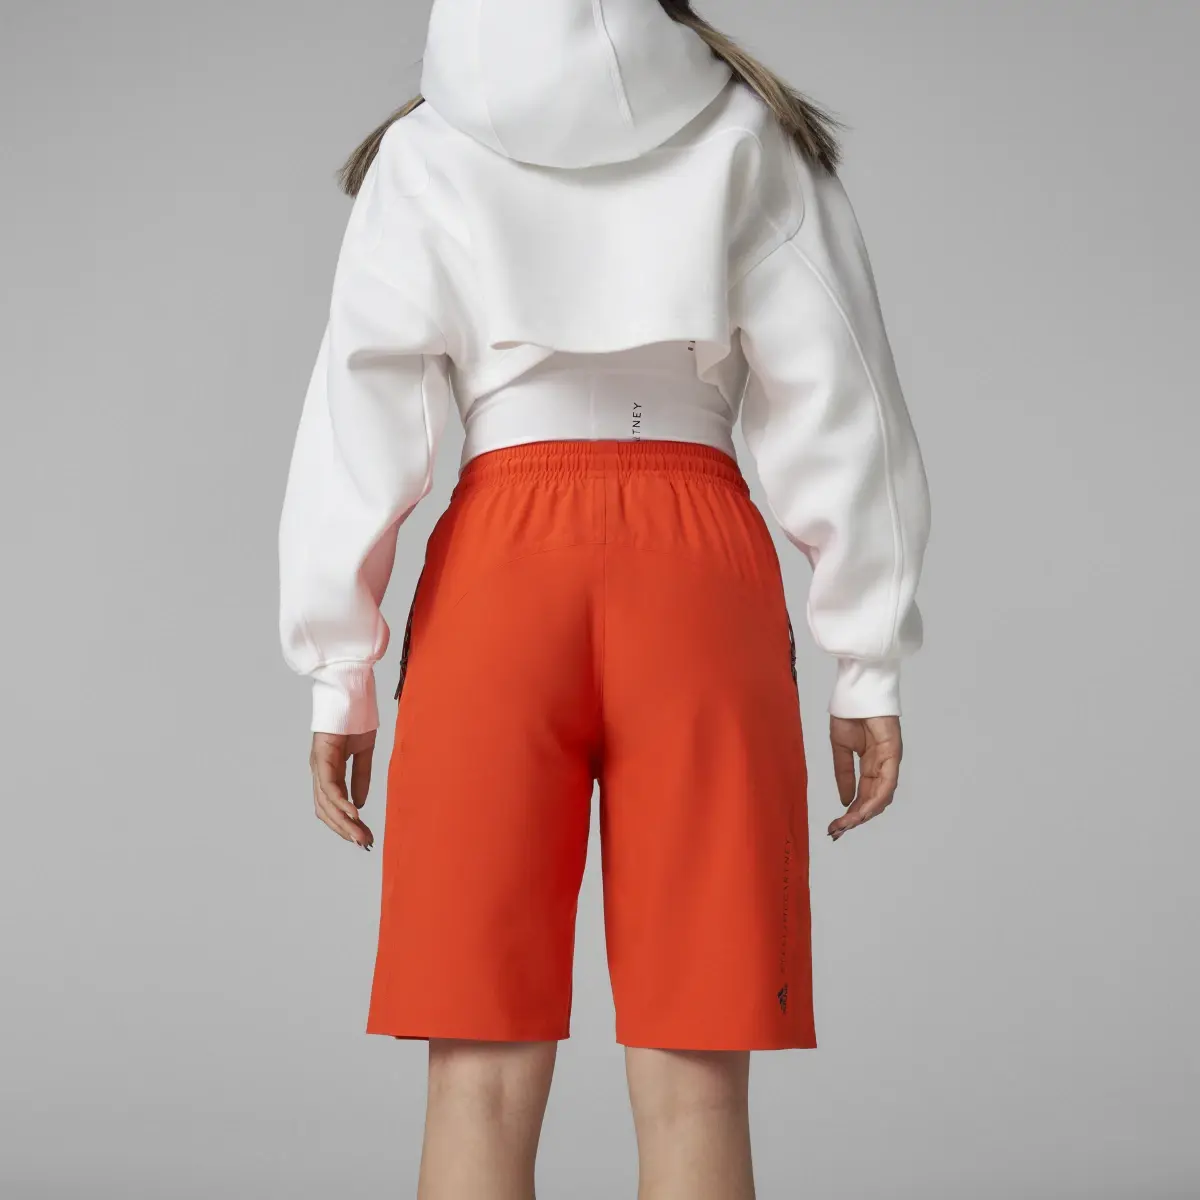 Adidas by Stella McCartney Woven Shorts. 3